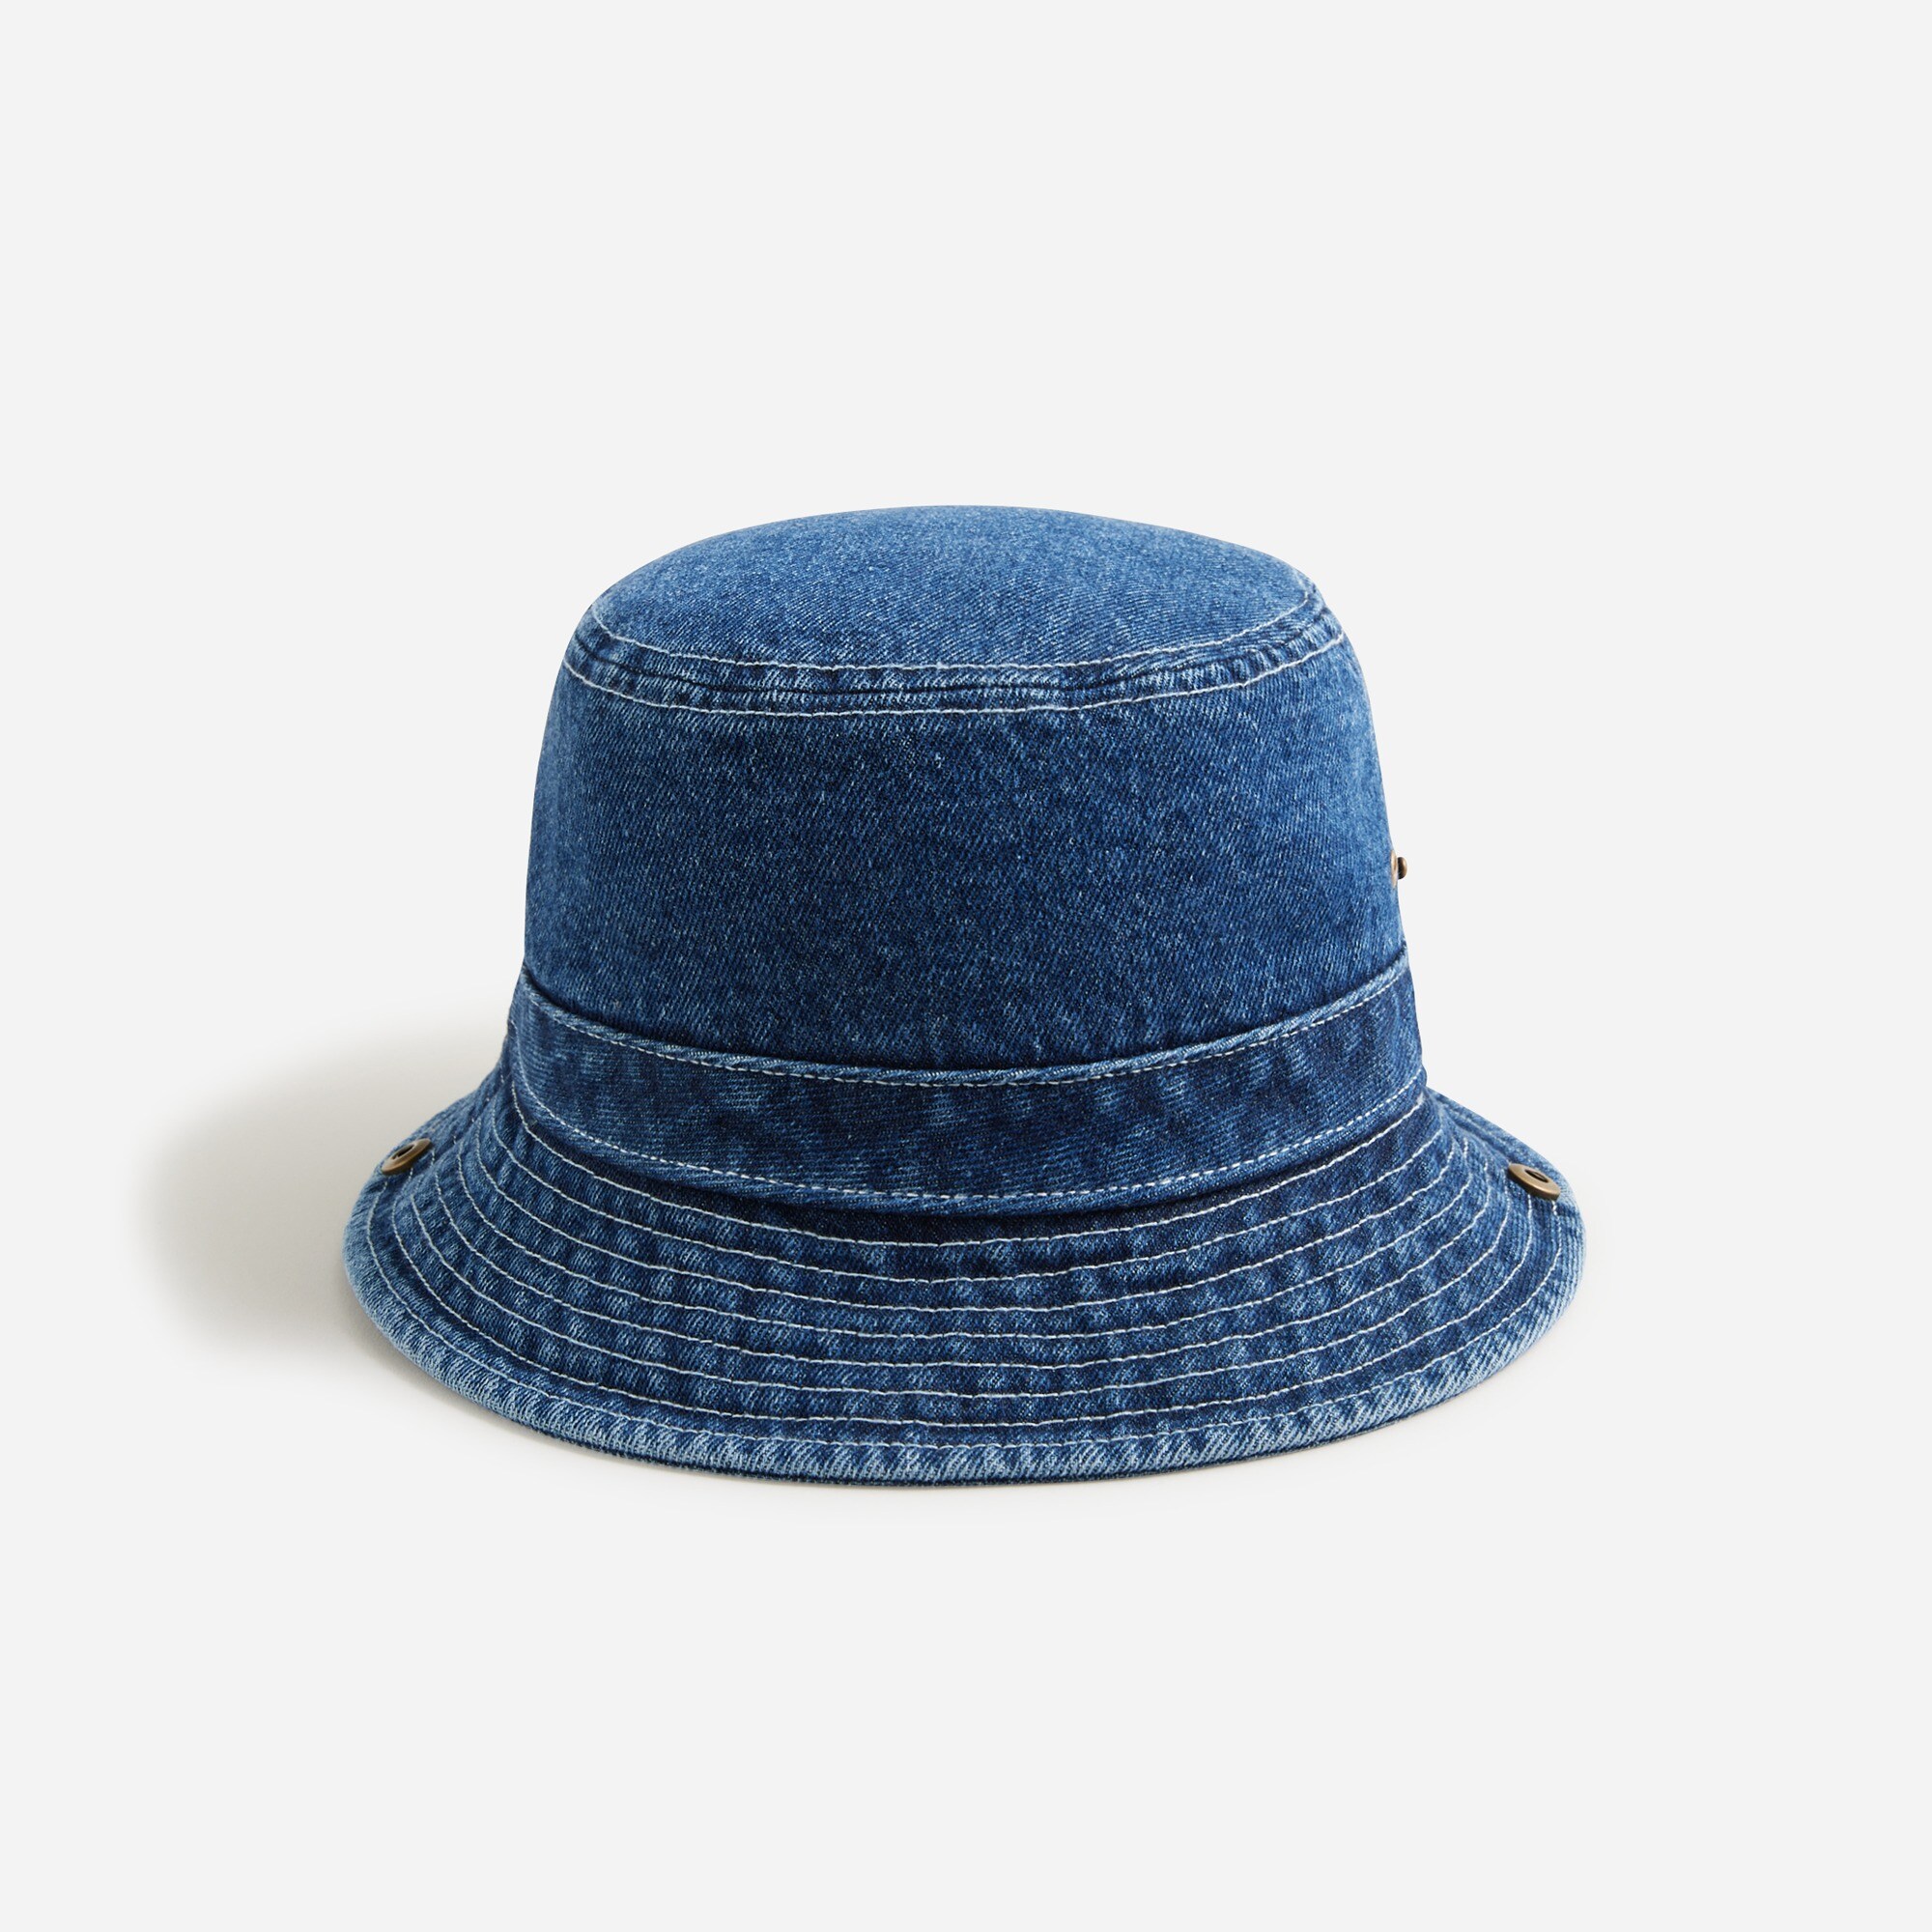 J.Crew Men's Denim Bucket Hat with Snaps (Size Small-Medium)